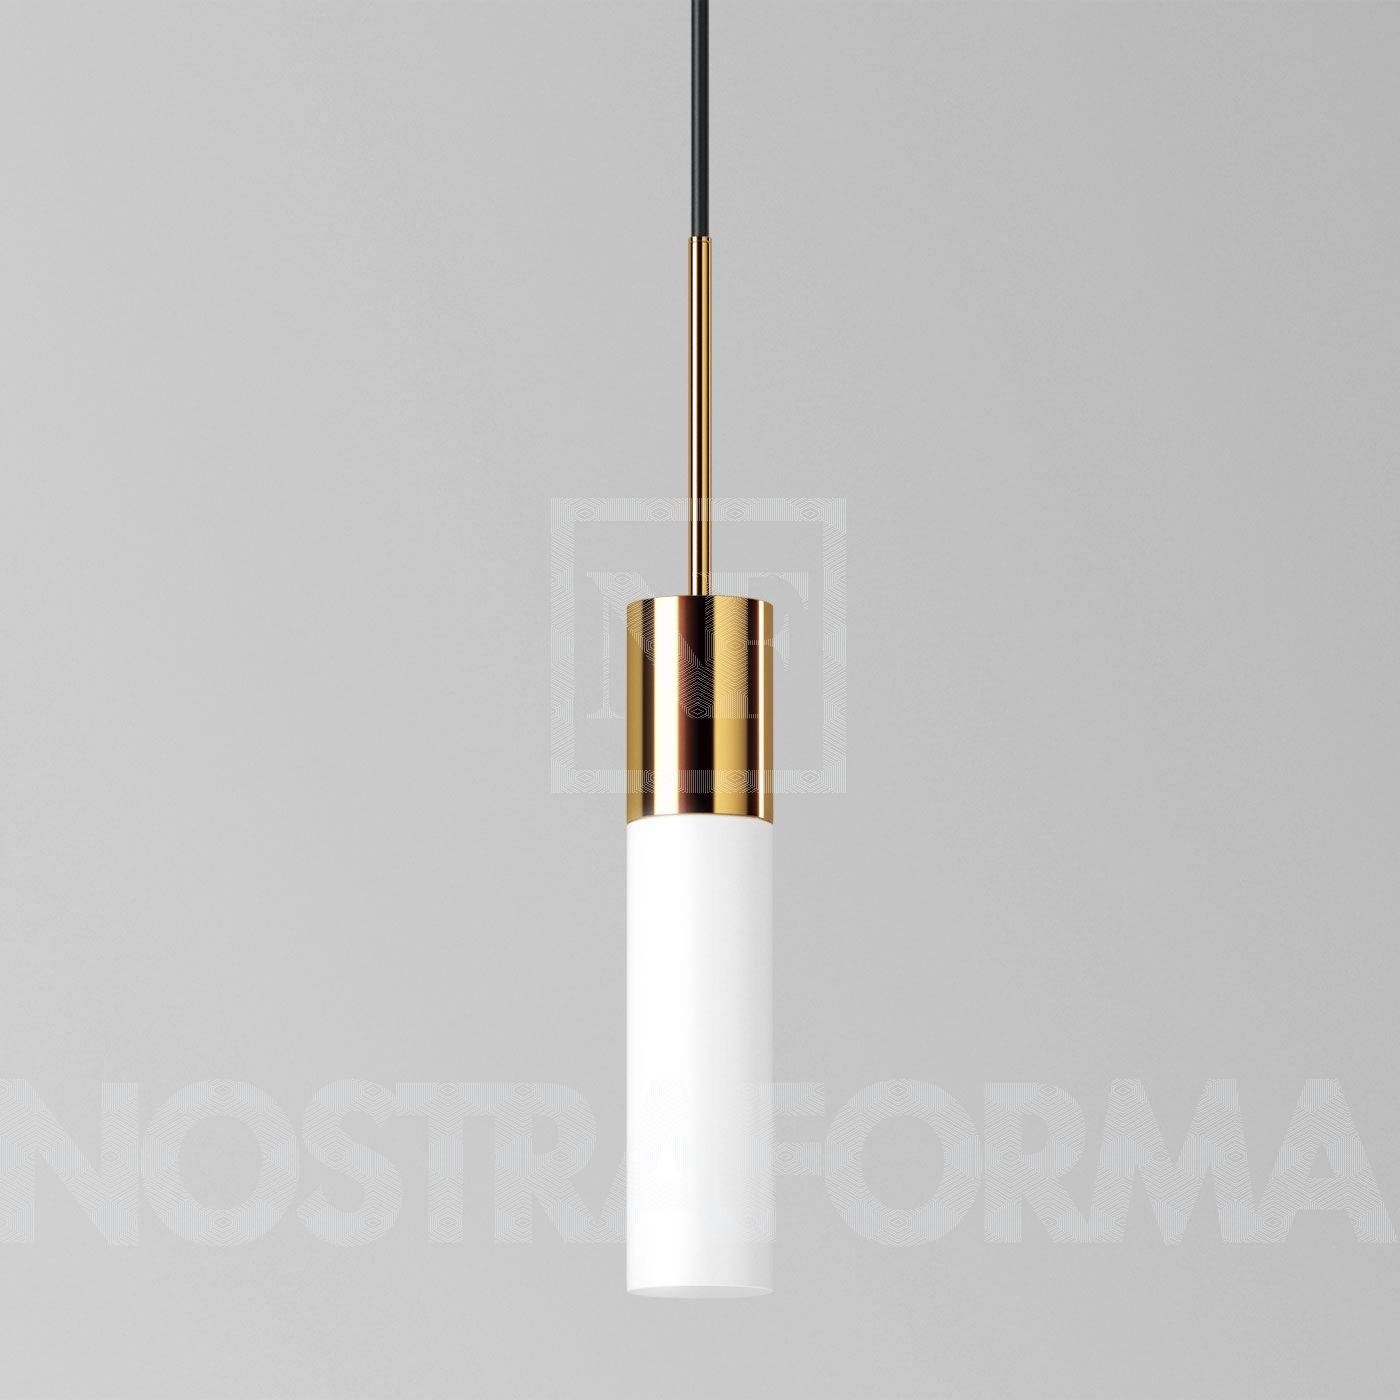 Bega 56390.4 / 45682.4 Pendant Lamp, Brass » Modern And With Regard To Tubular Pendant Lights (Photo 14 of 15)